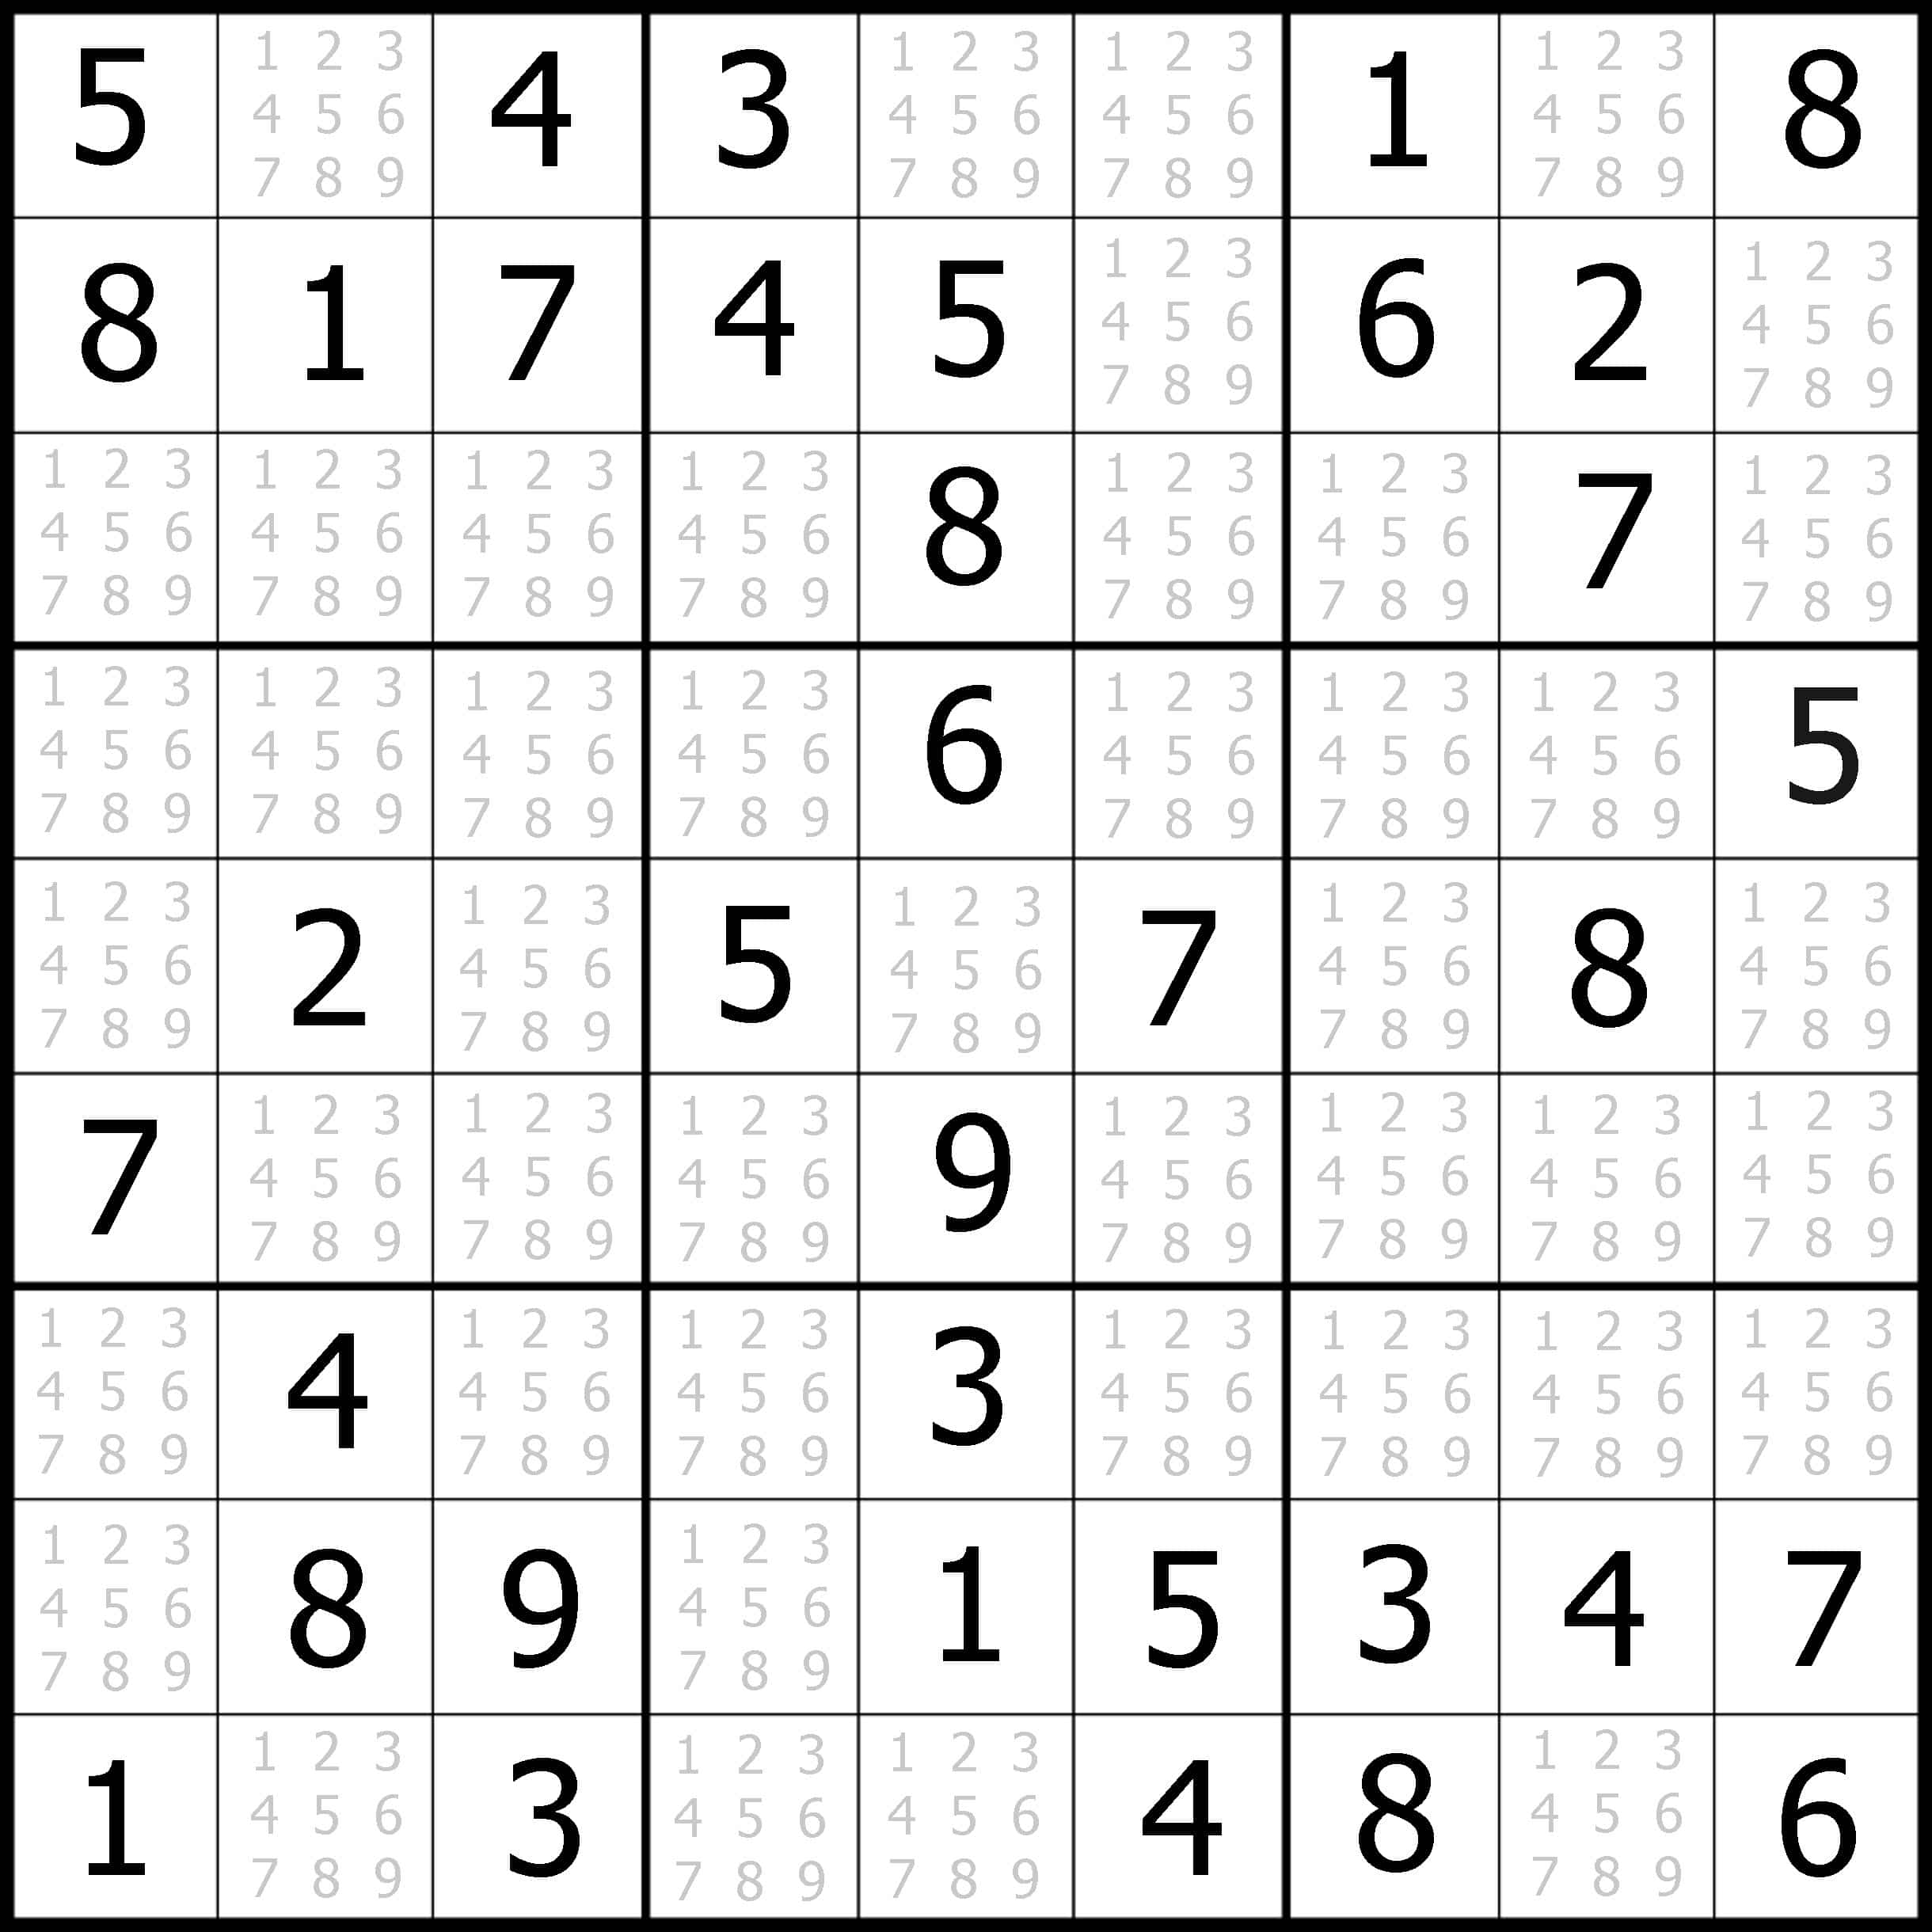 play sudoku games